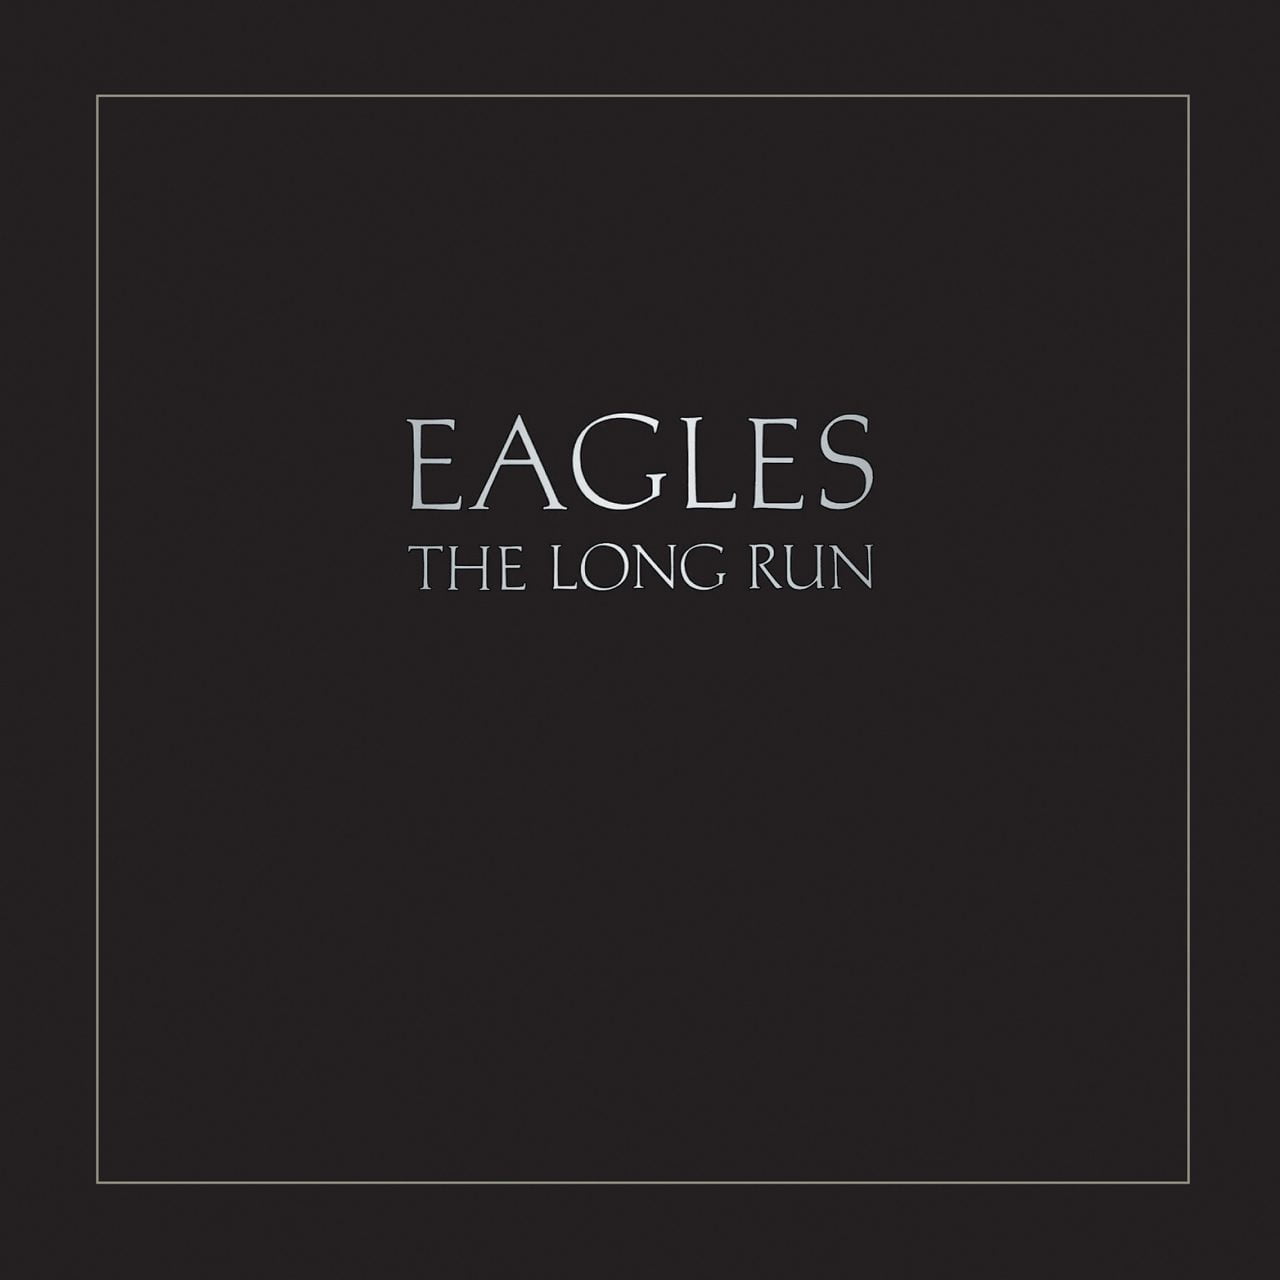 Eagles – The Long Run cover album